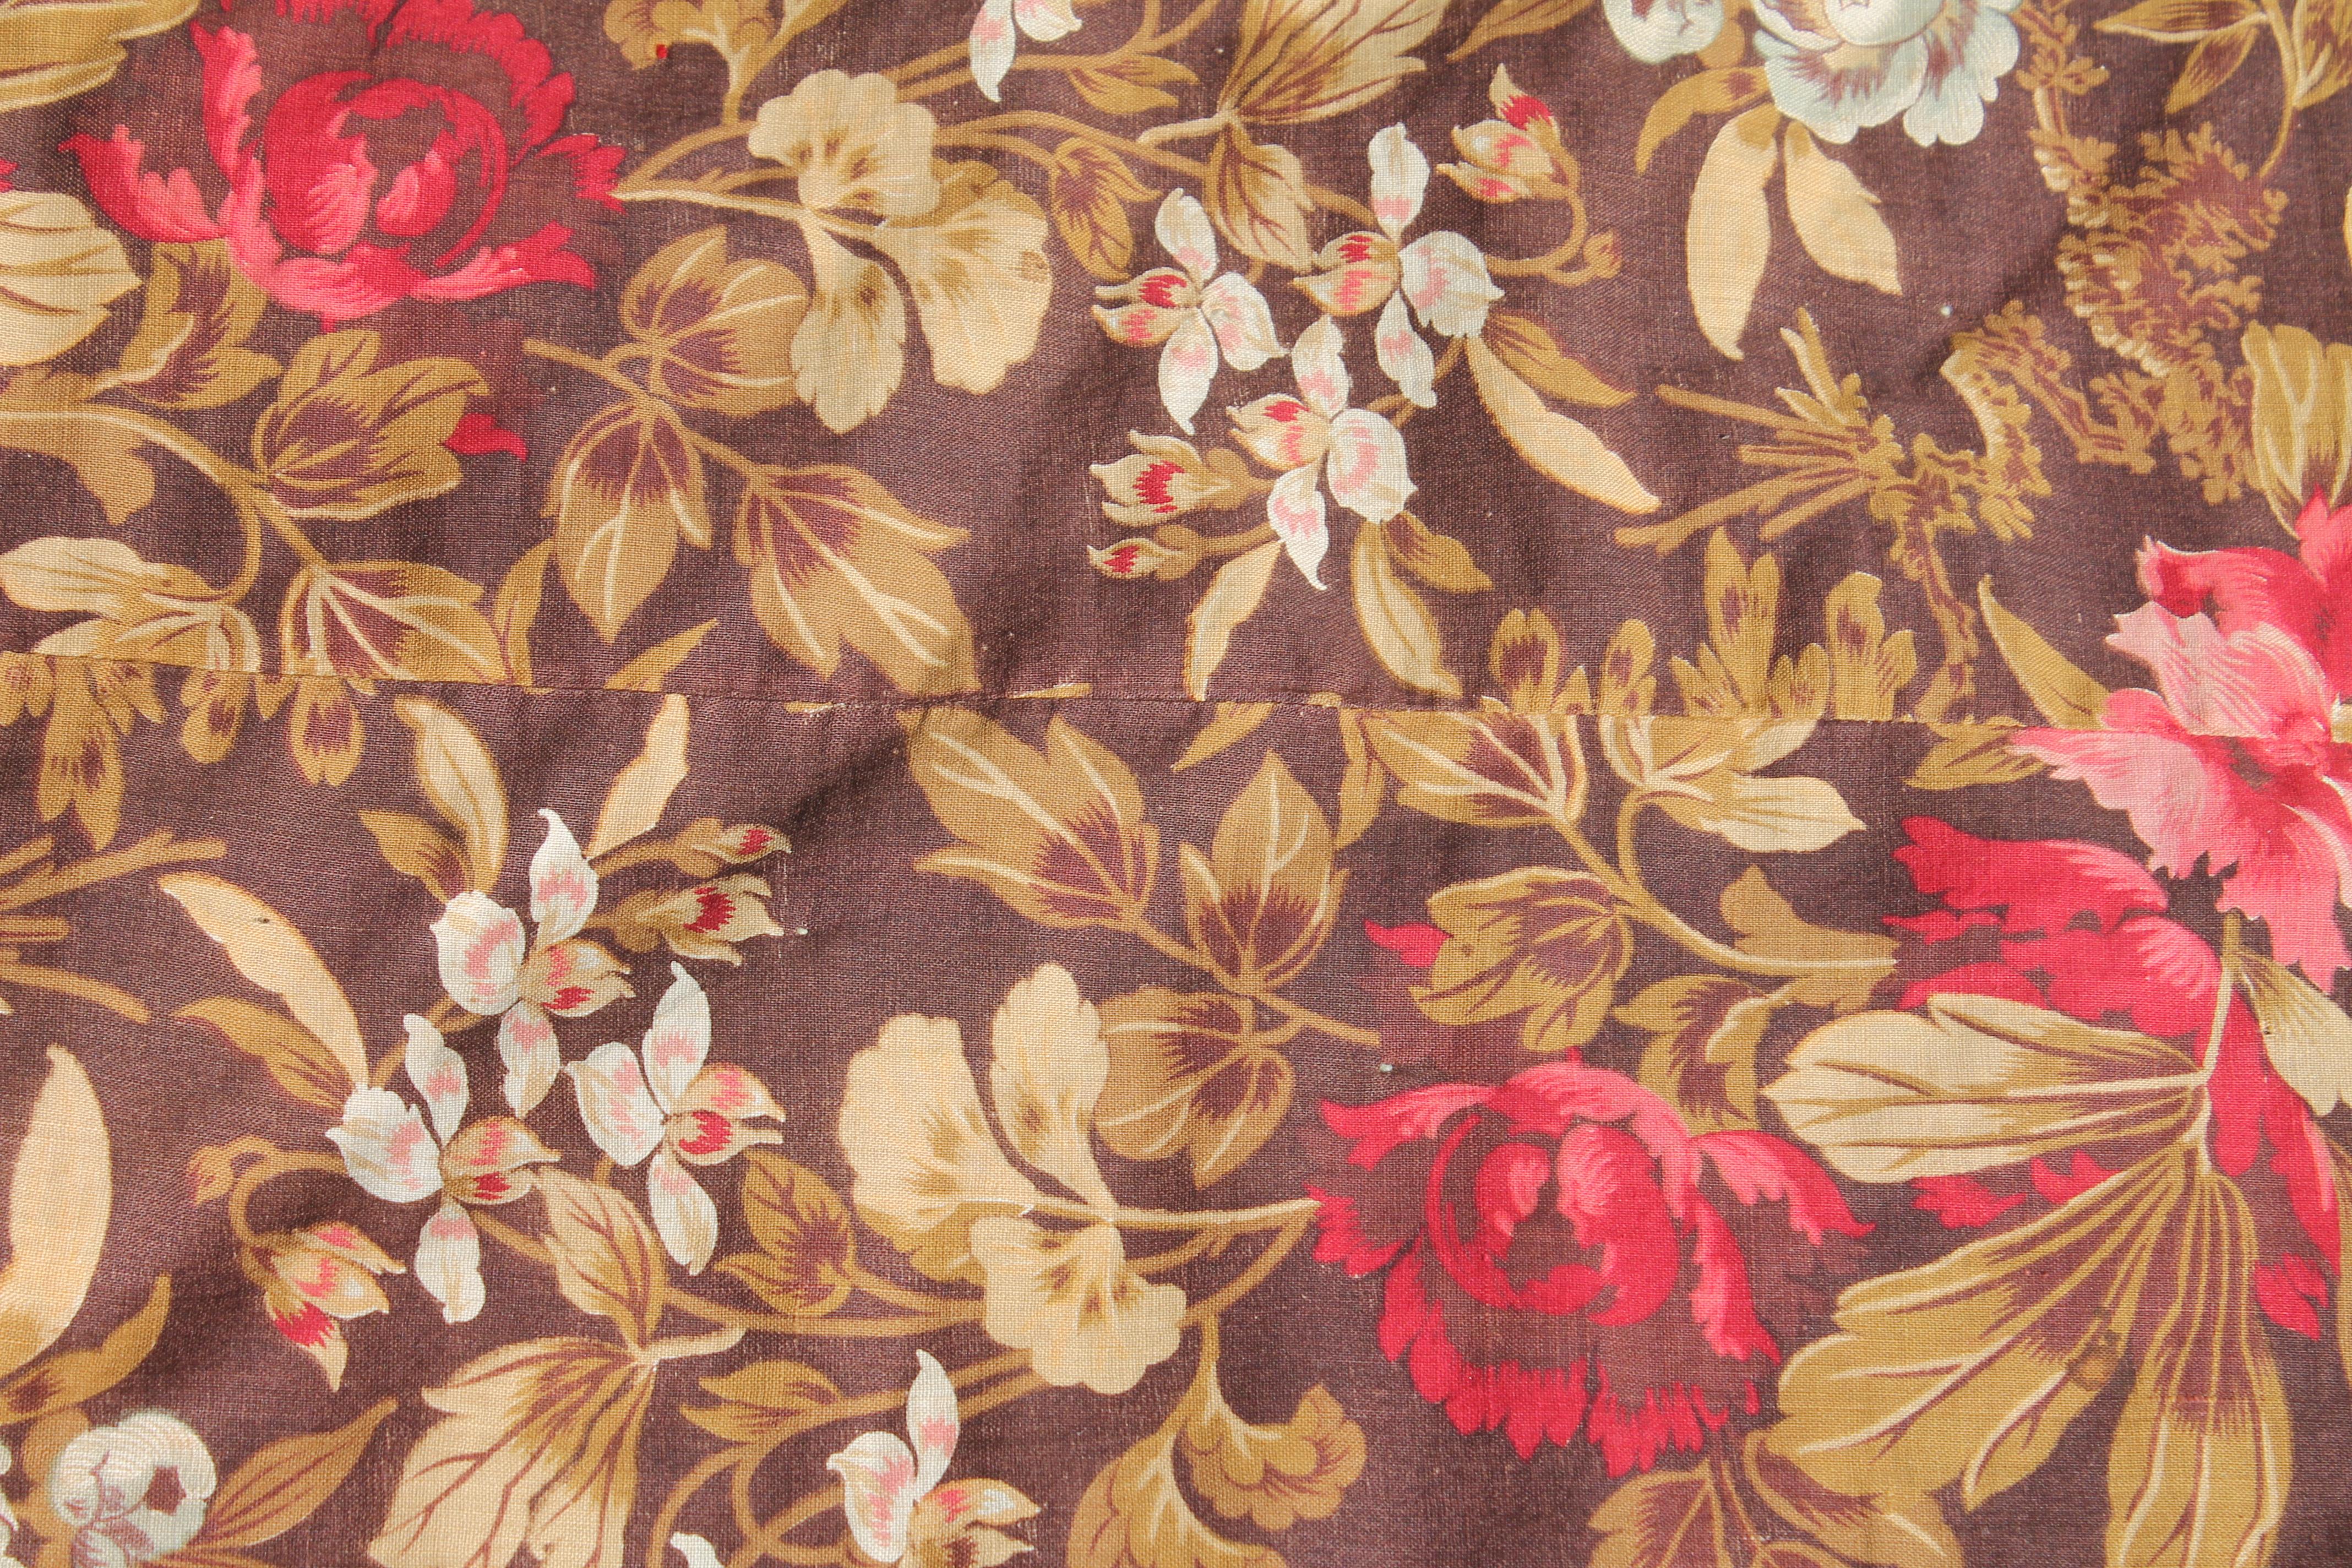 Velvet Antique Quilt, Contained 19th Century Crazy Quilt from Pennsylvania